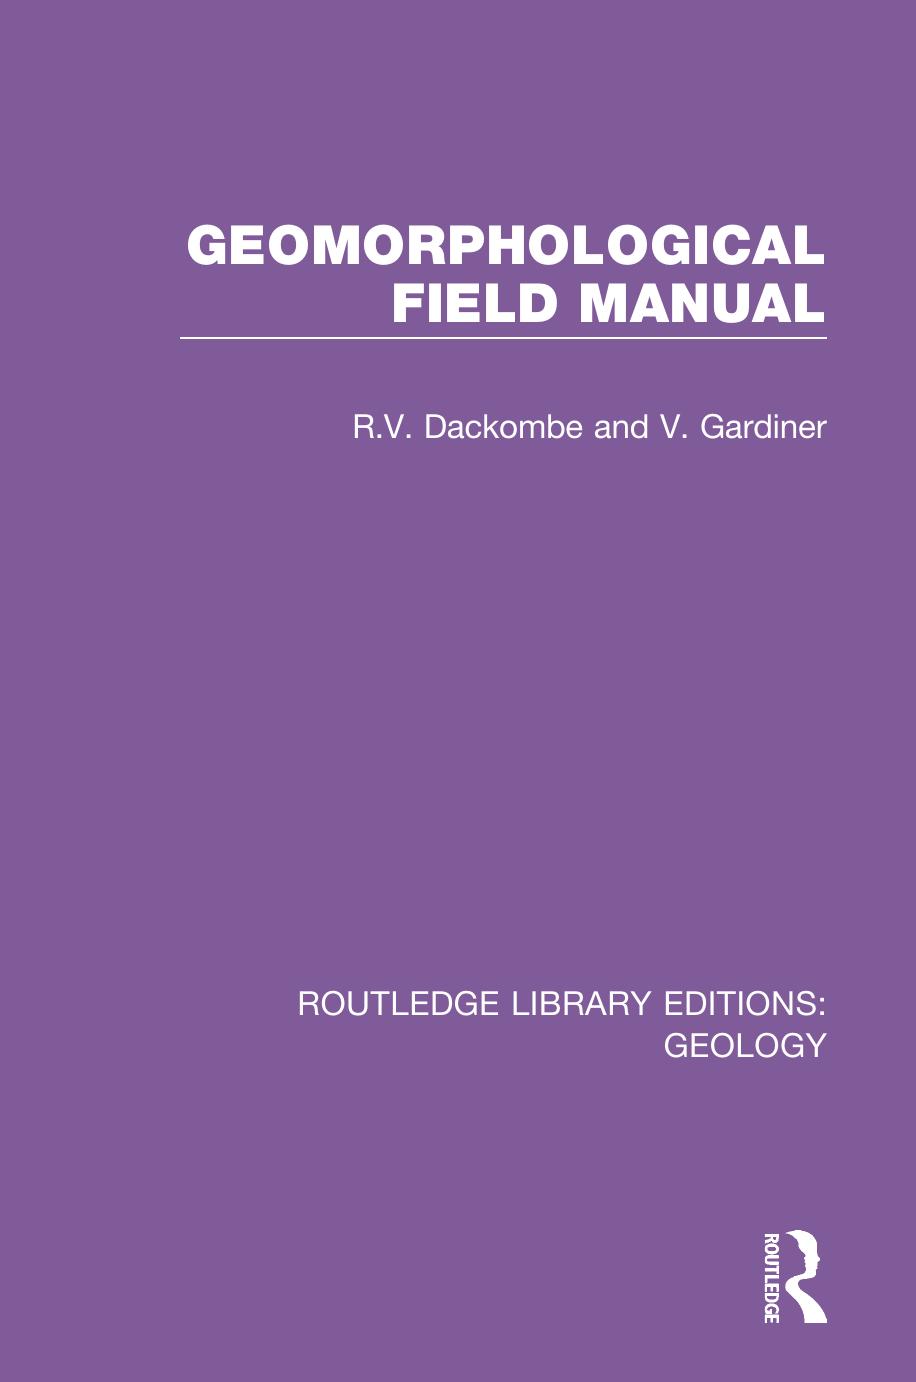 Geomorphological Field Manual by R. Dackombe V. Gardiner